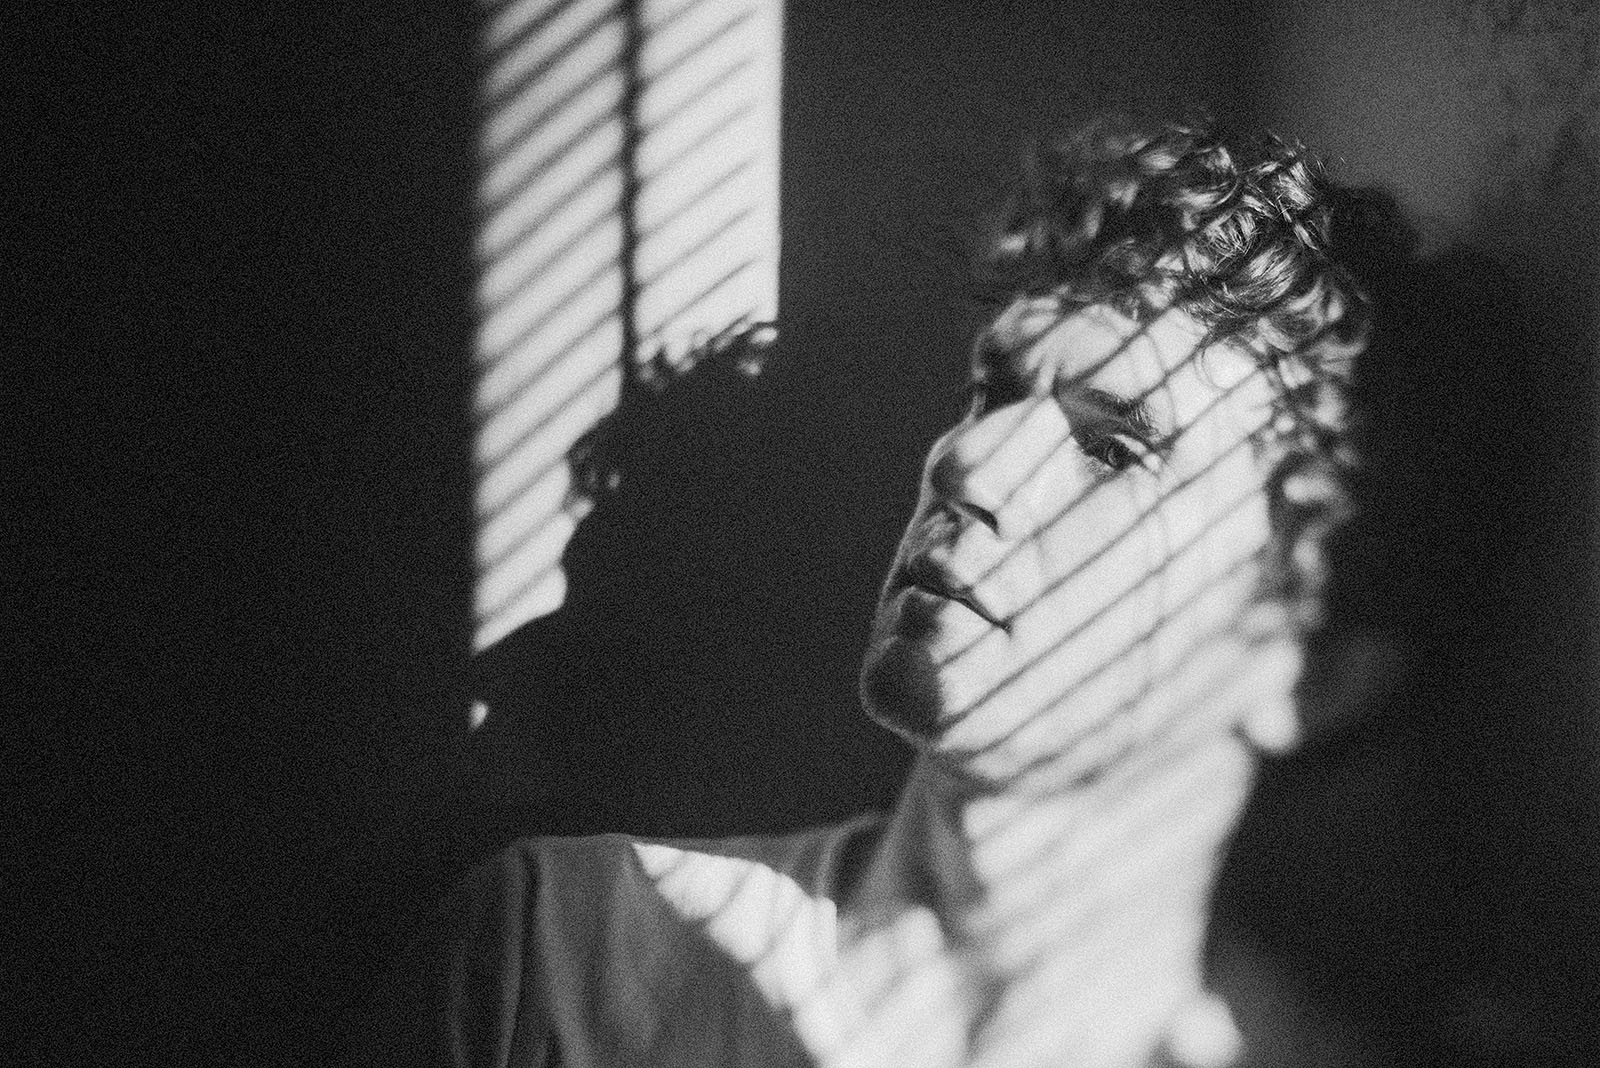 Black and white portrait of Lorain's lead singer - Portland Music Photographer